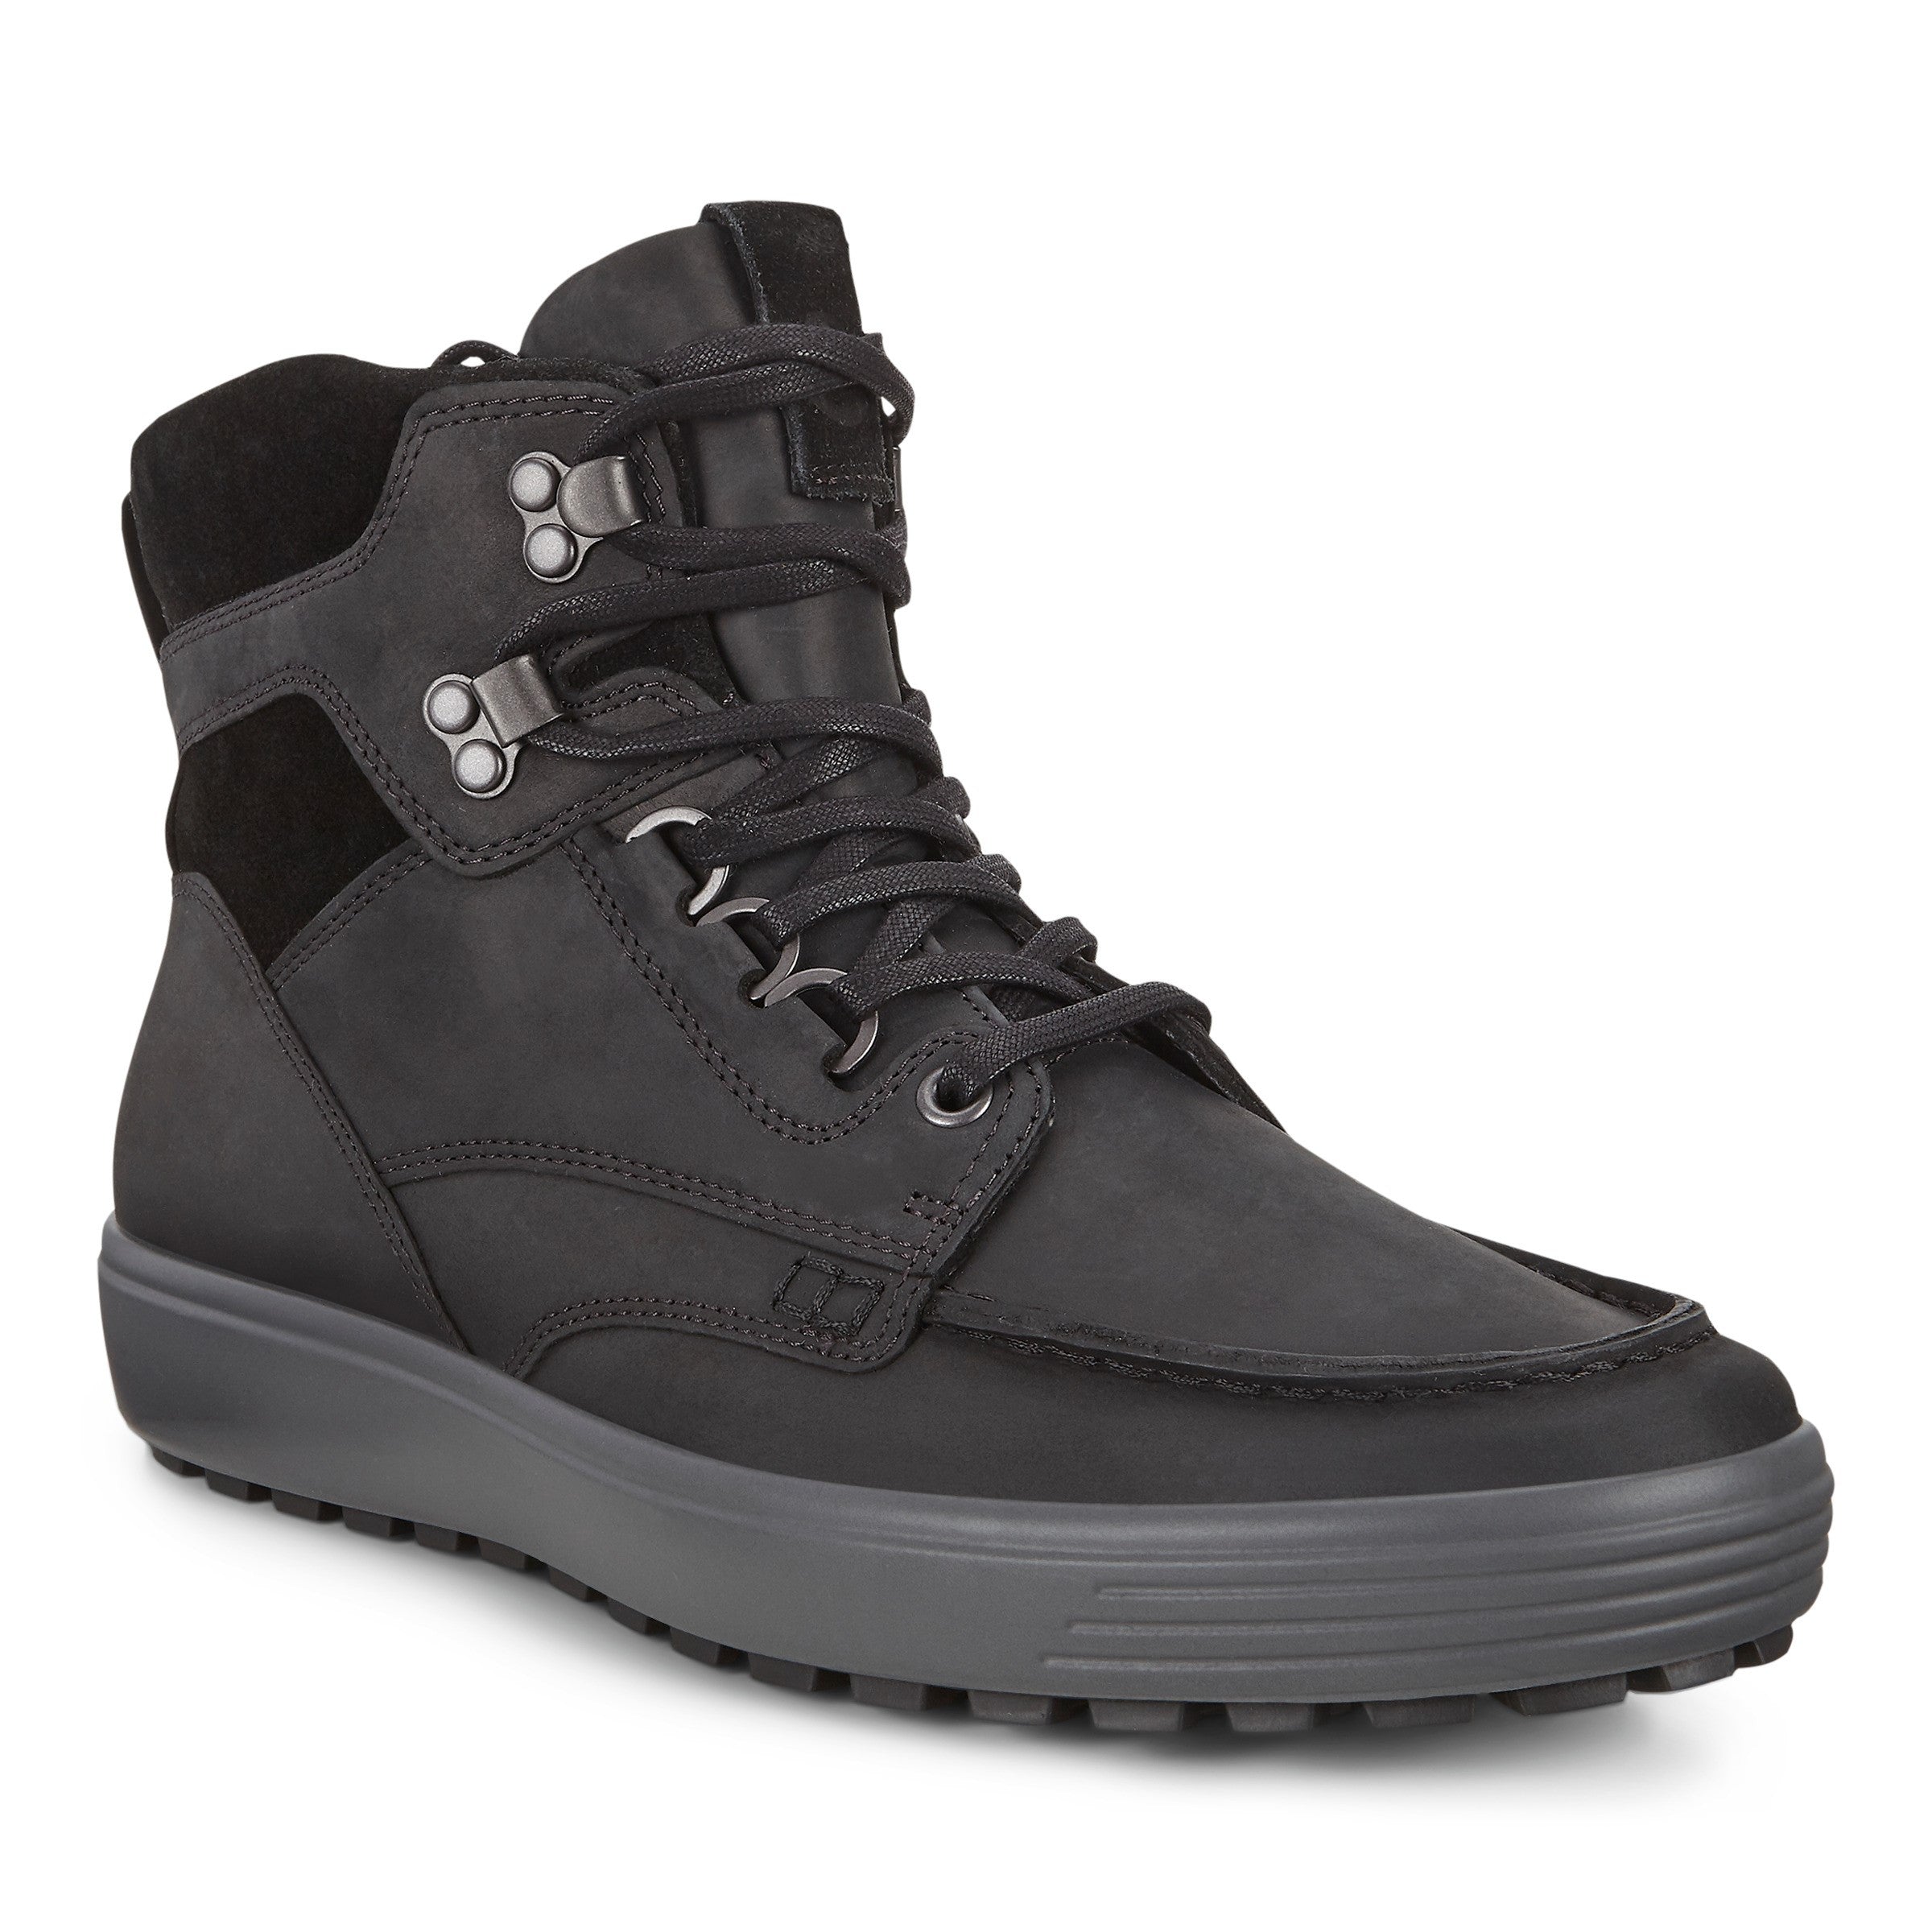 Ecco Men's 7 Tred Waterproof - Black/Black – Shoes